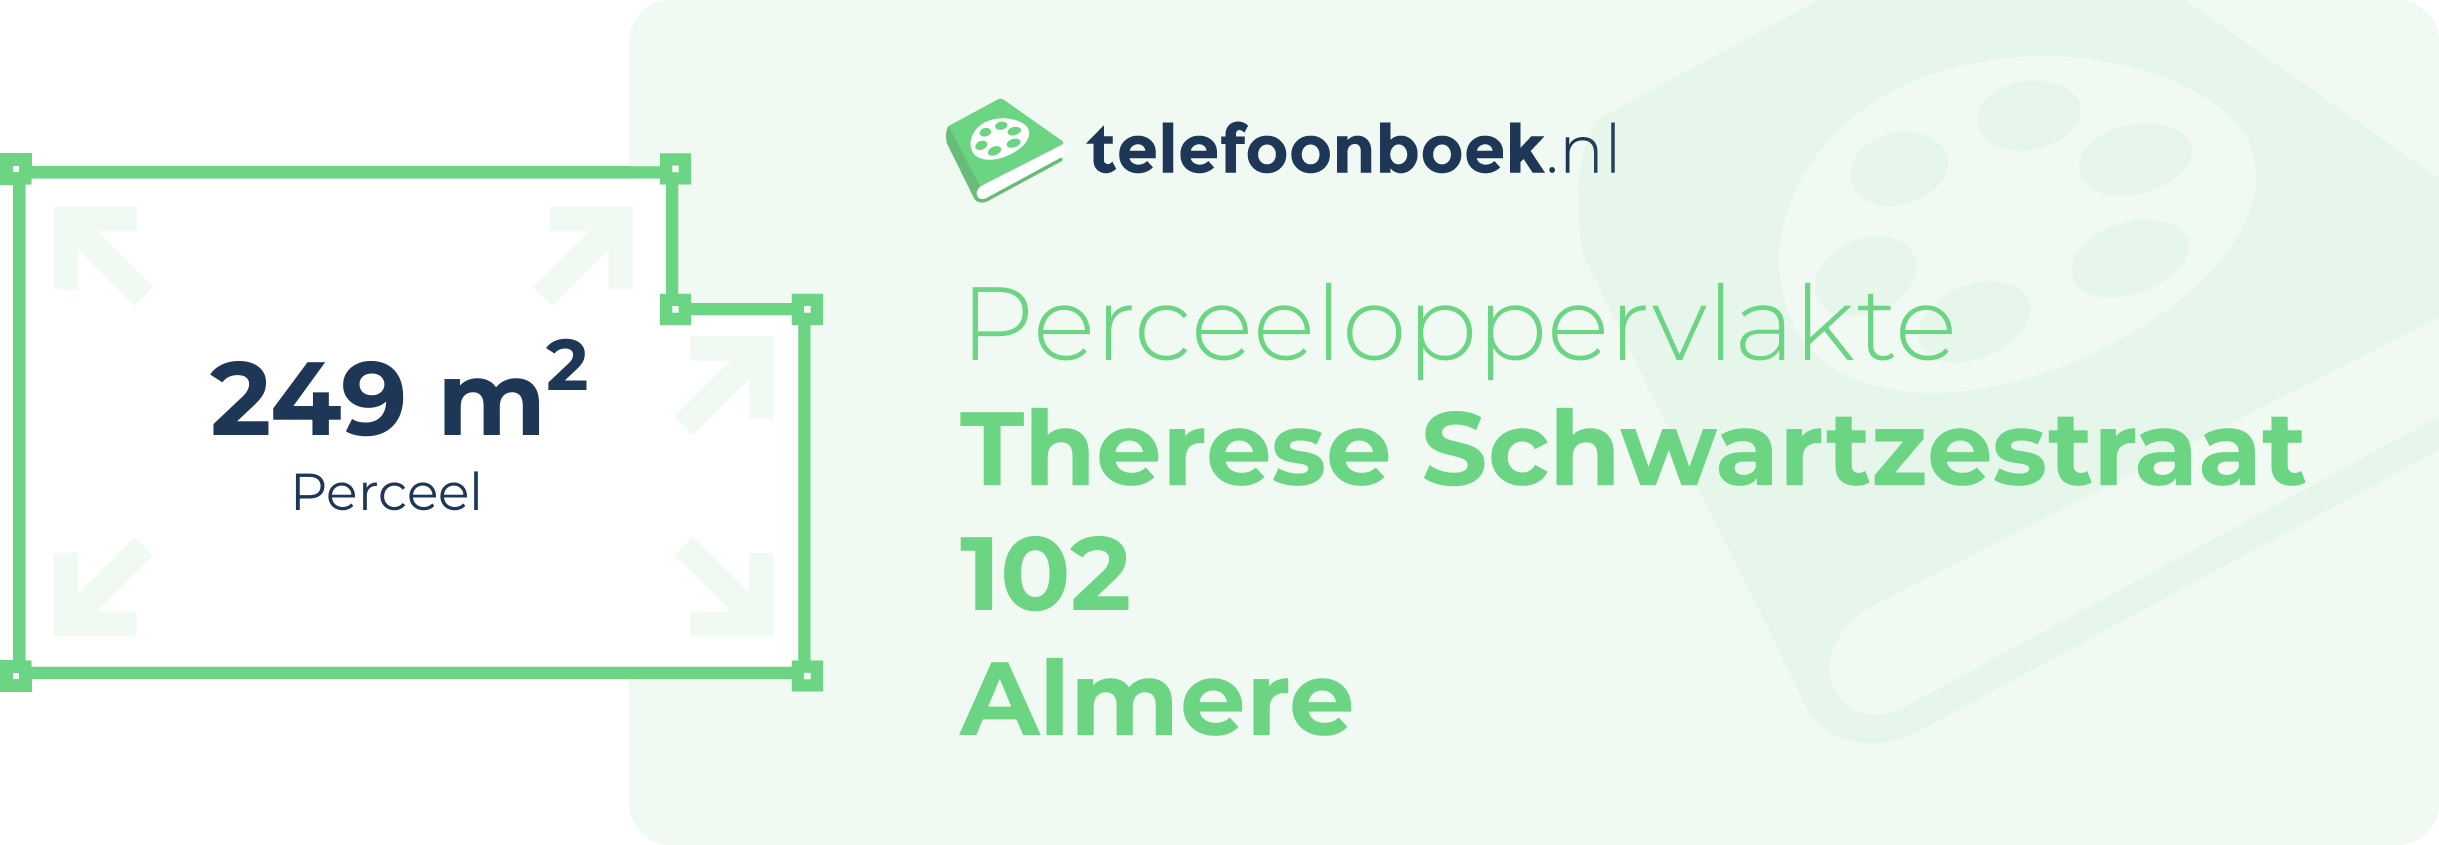 Perceeloppervlakte Therese Schwartzestraat 102 Almere